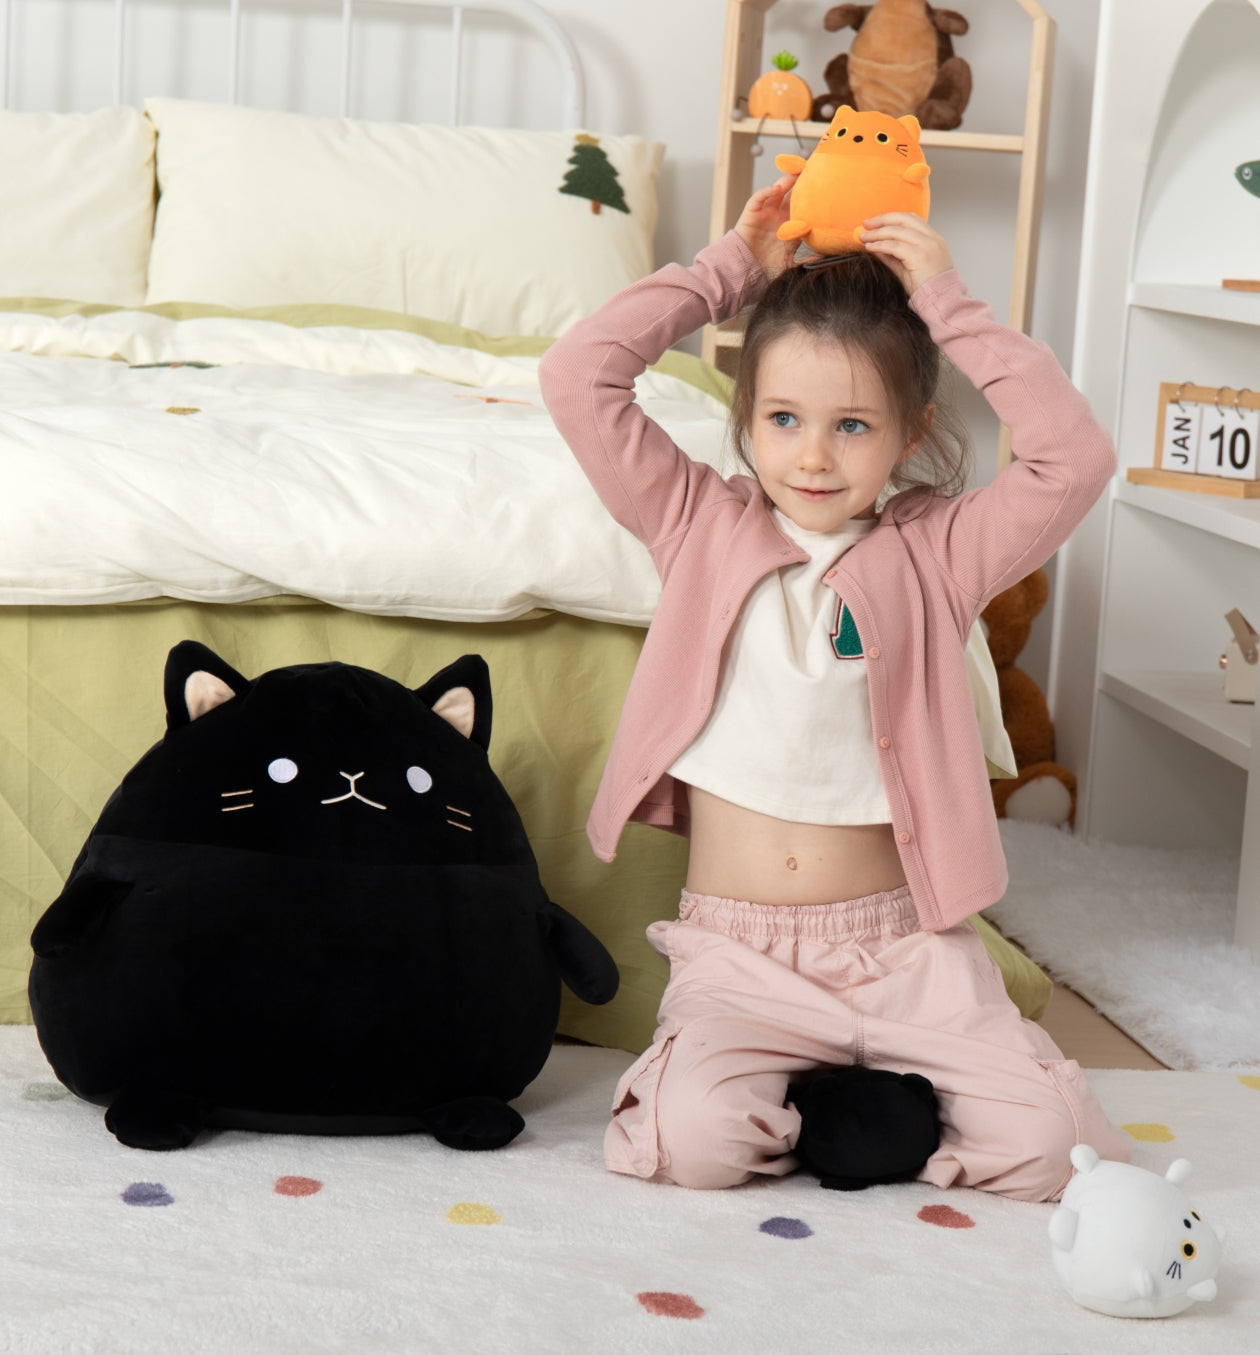 Black Chubby Cat Plush Toys, 15.75 Inches